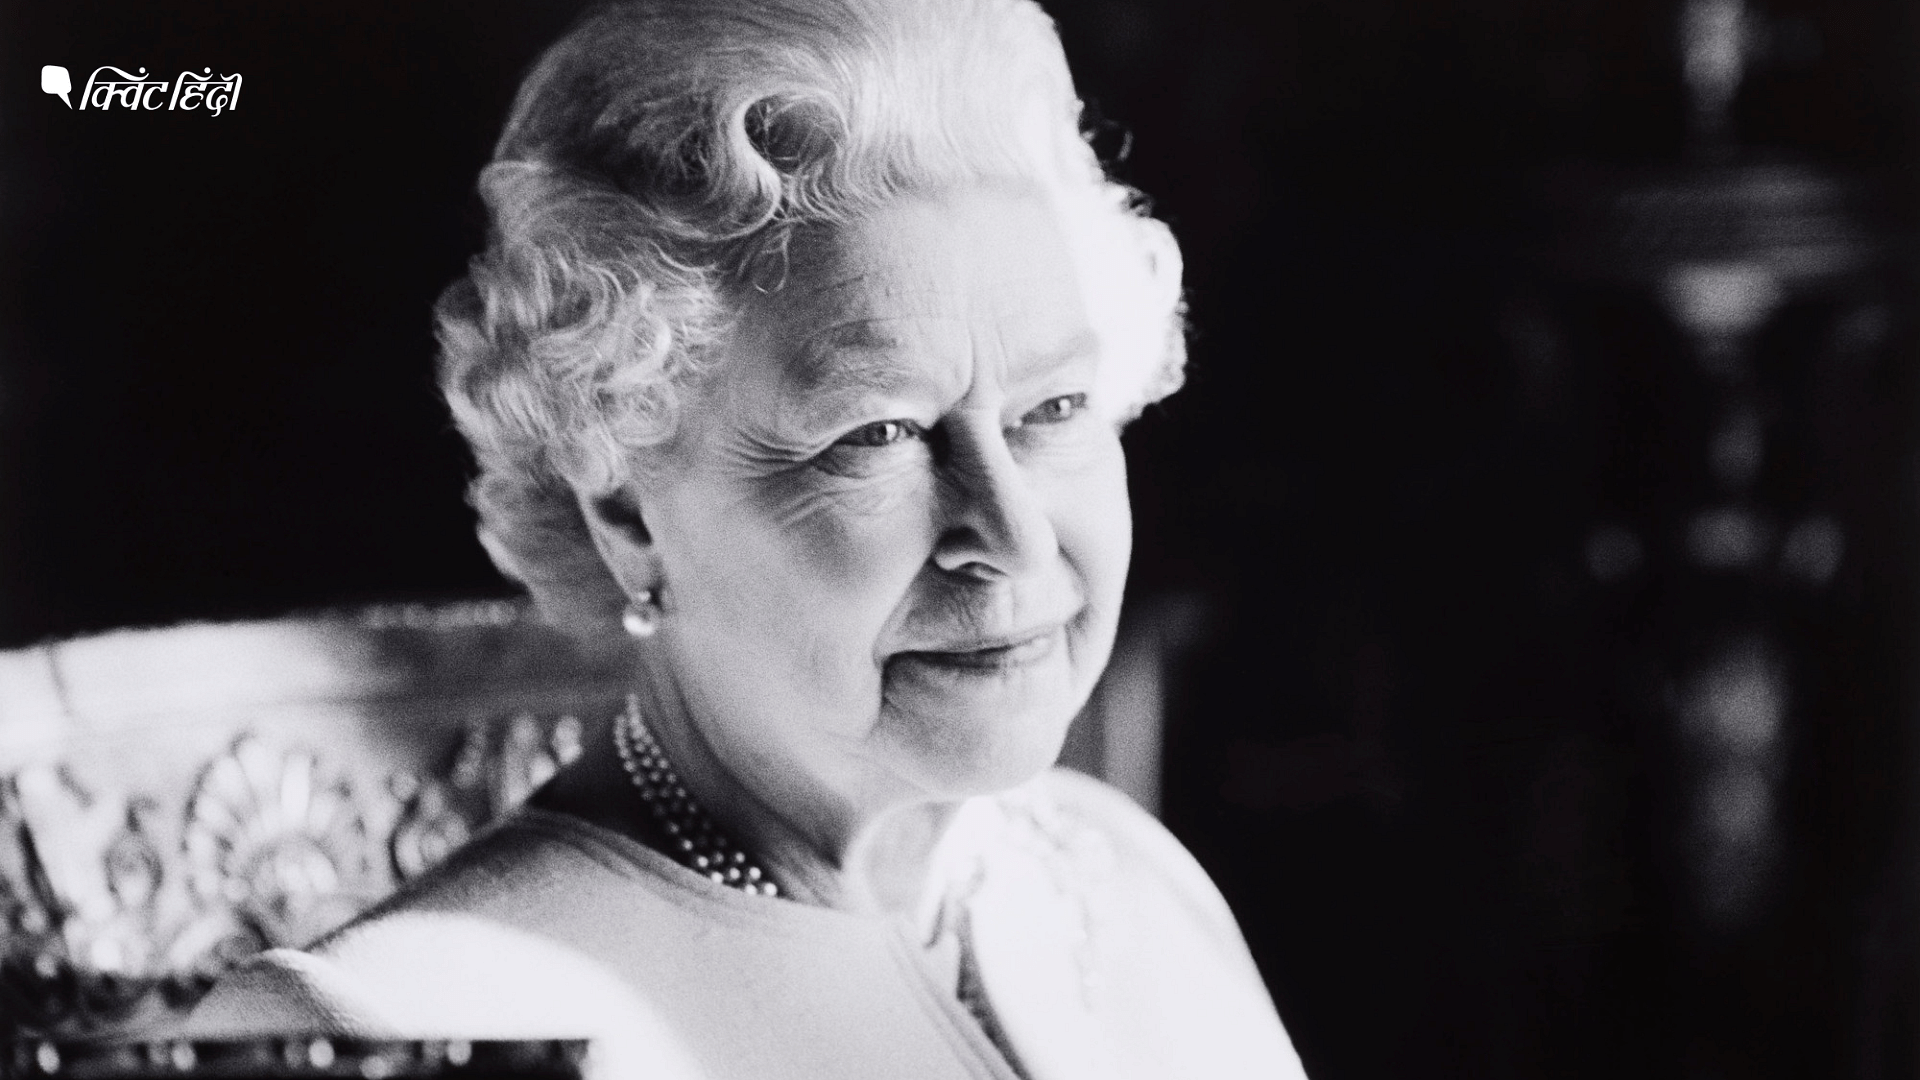 <div class="paragraphs"><p>Queen Elizabeth II का 96 साल की आयु में निधन</p></div>